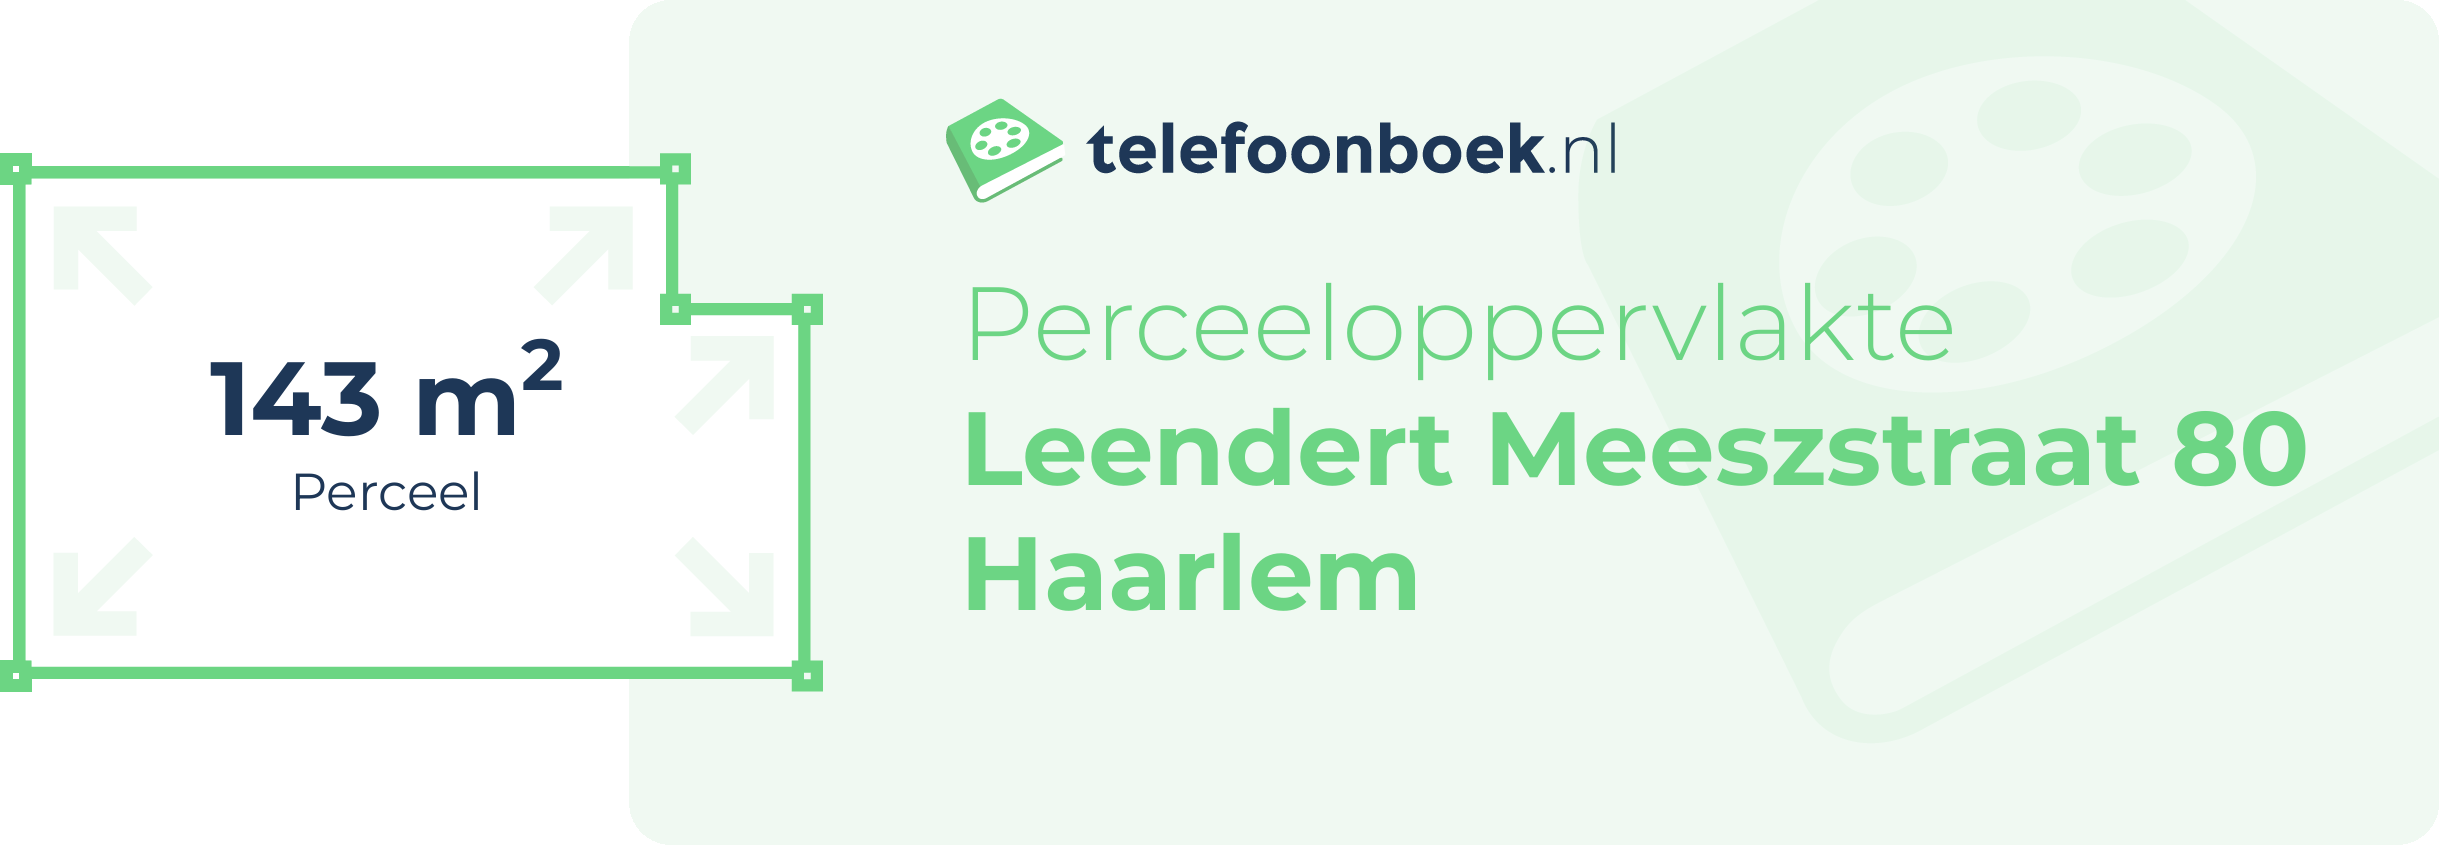 Perceeloppervlakte Leendert Meeszstraat 80 Haarlem